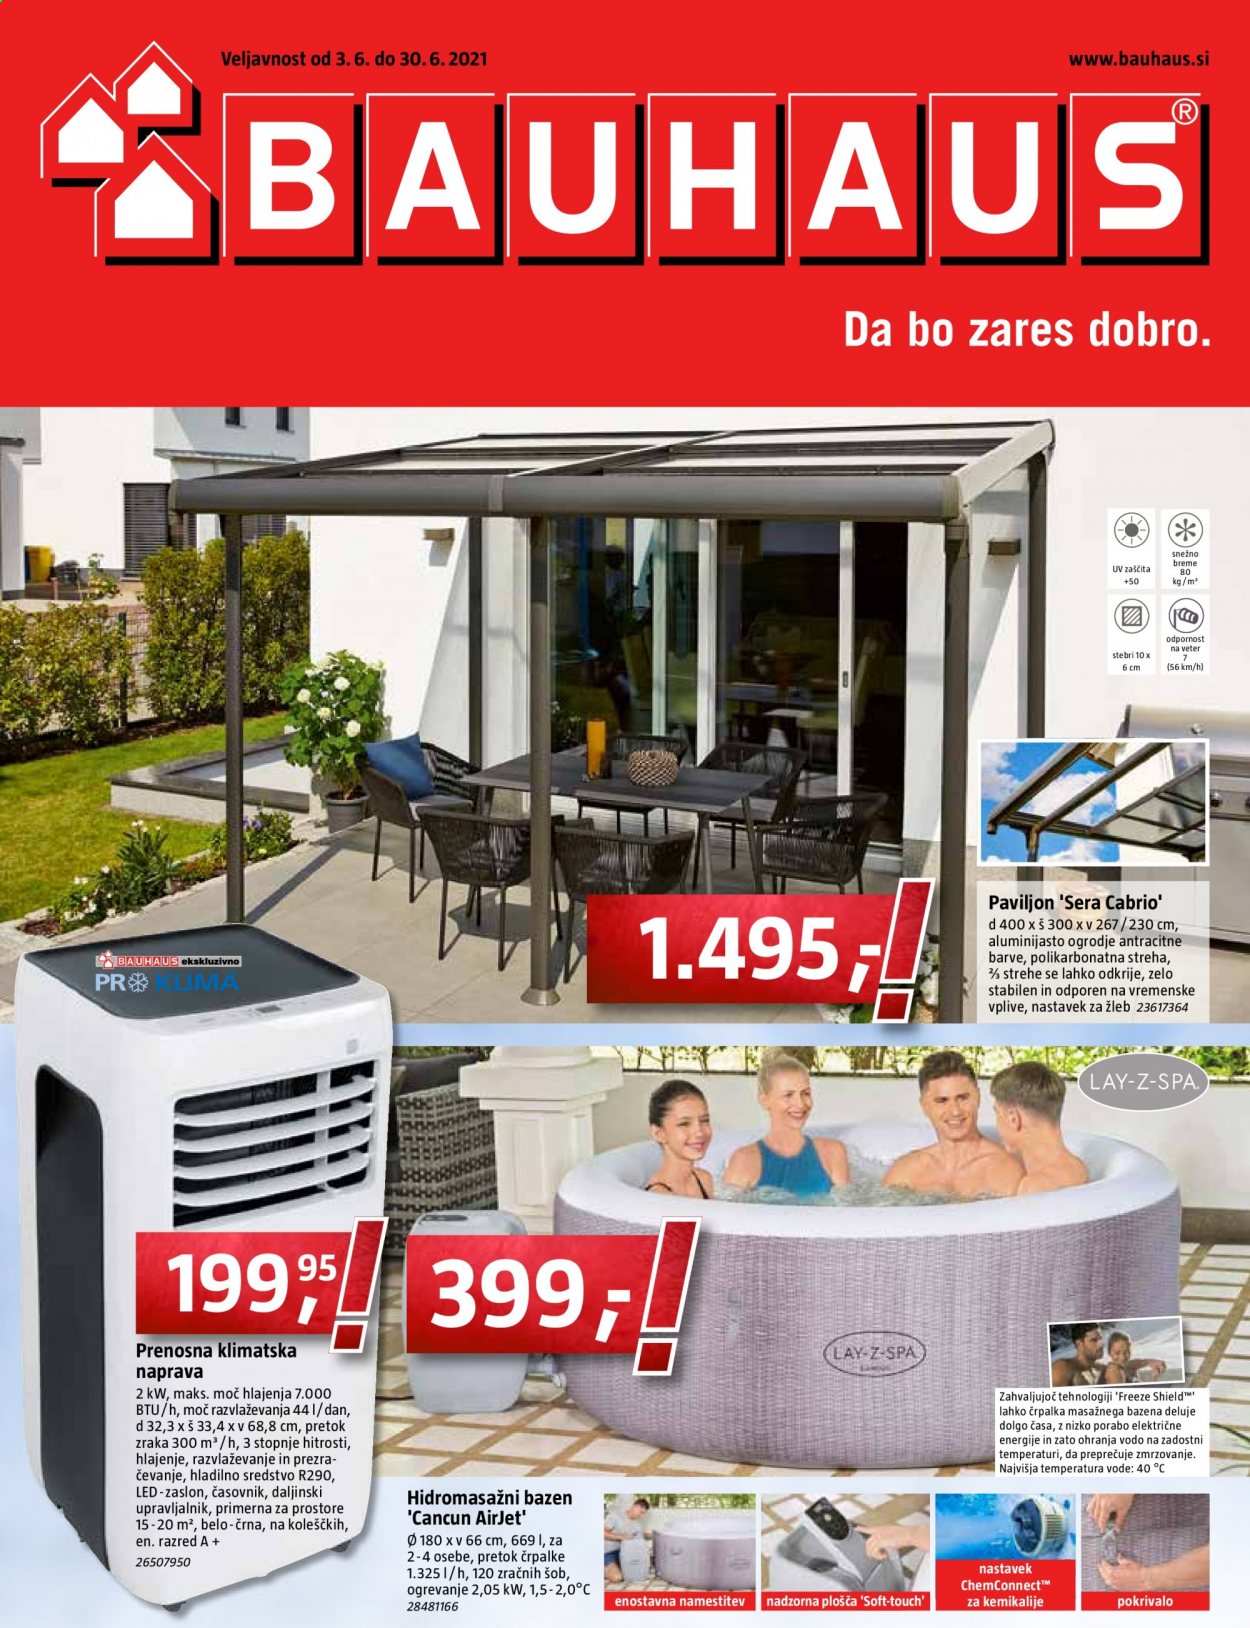 thumbnail - Bauhaus katalog - 3.6.2021 - 30.6.2021 - Ponudba izdelkov - klimatska naprava, prenosna klimatska naprava, paviljon, bazen. Stran 1.